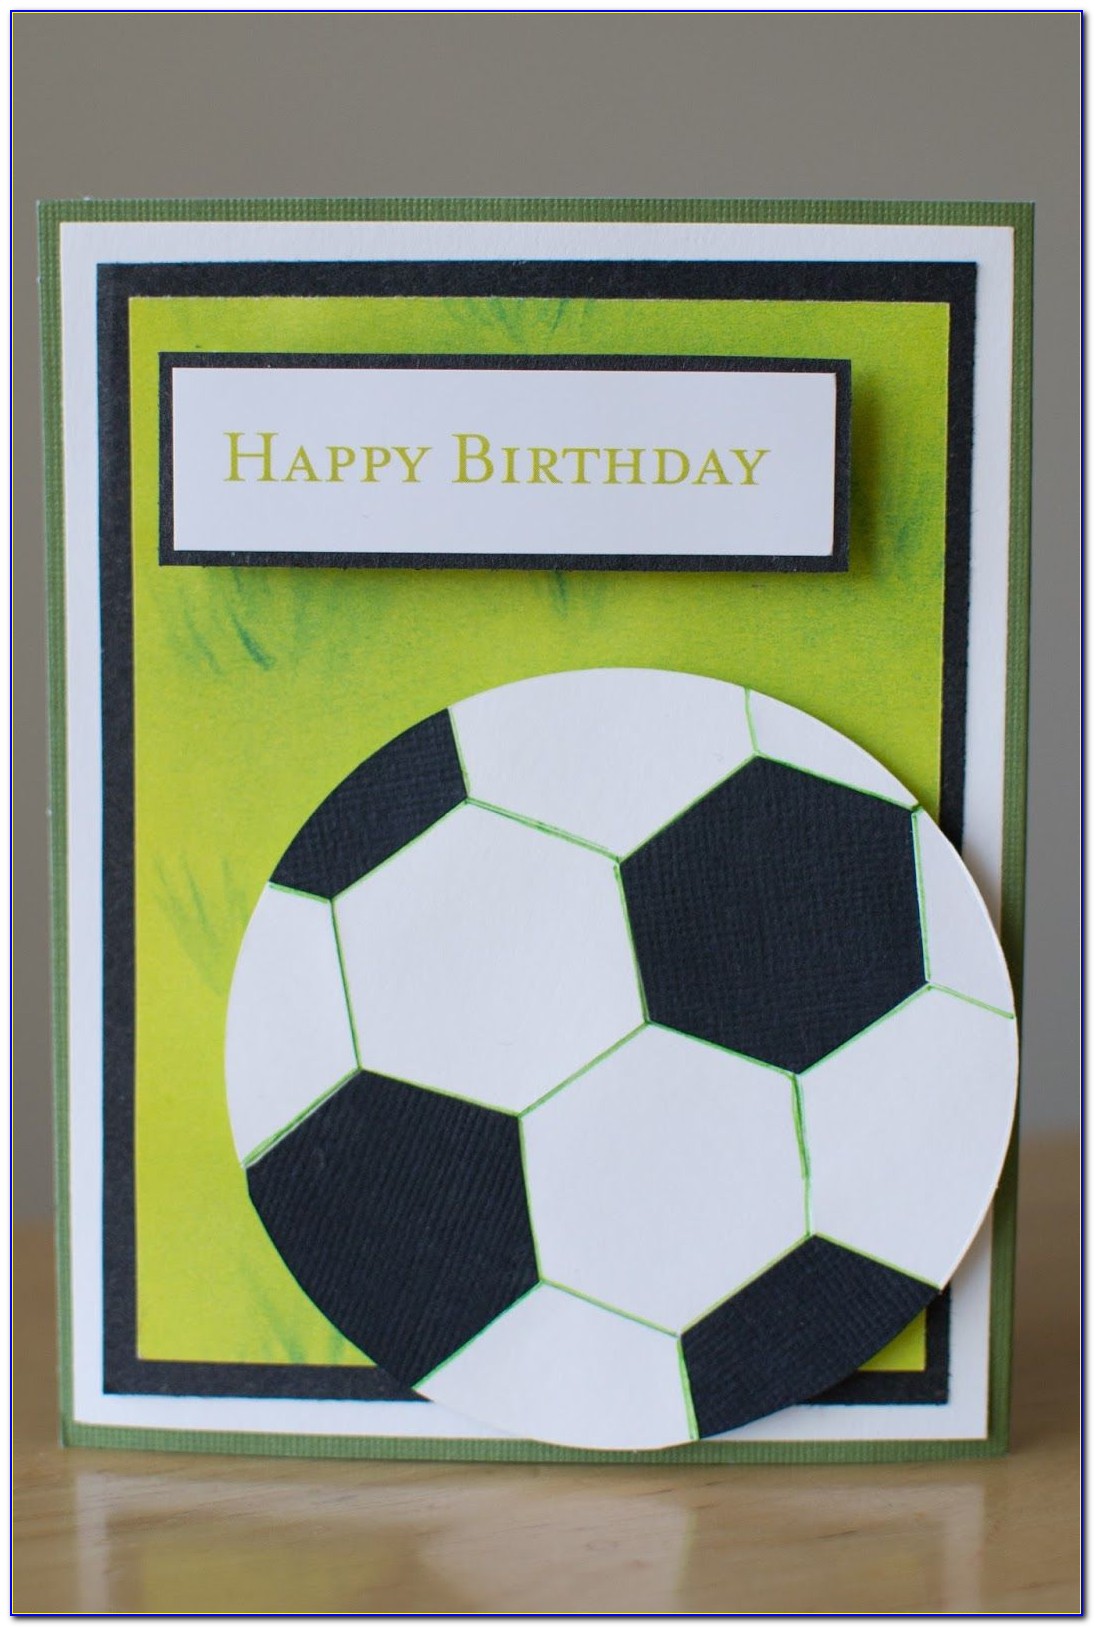 Soccer Birthday Cards To Print